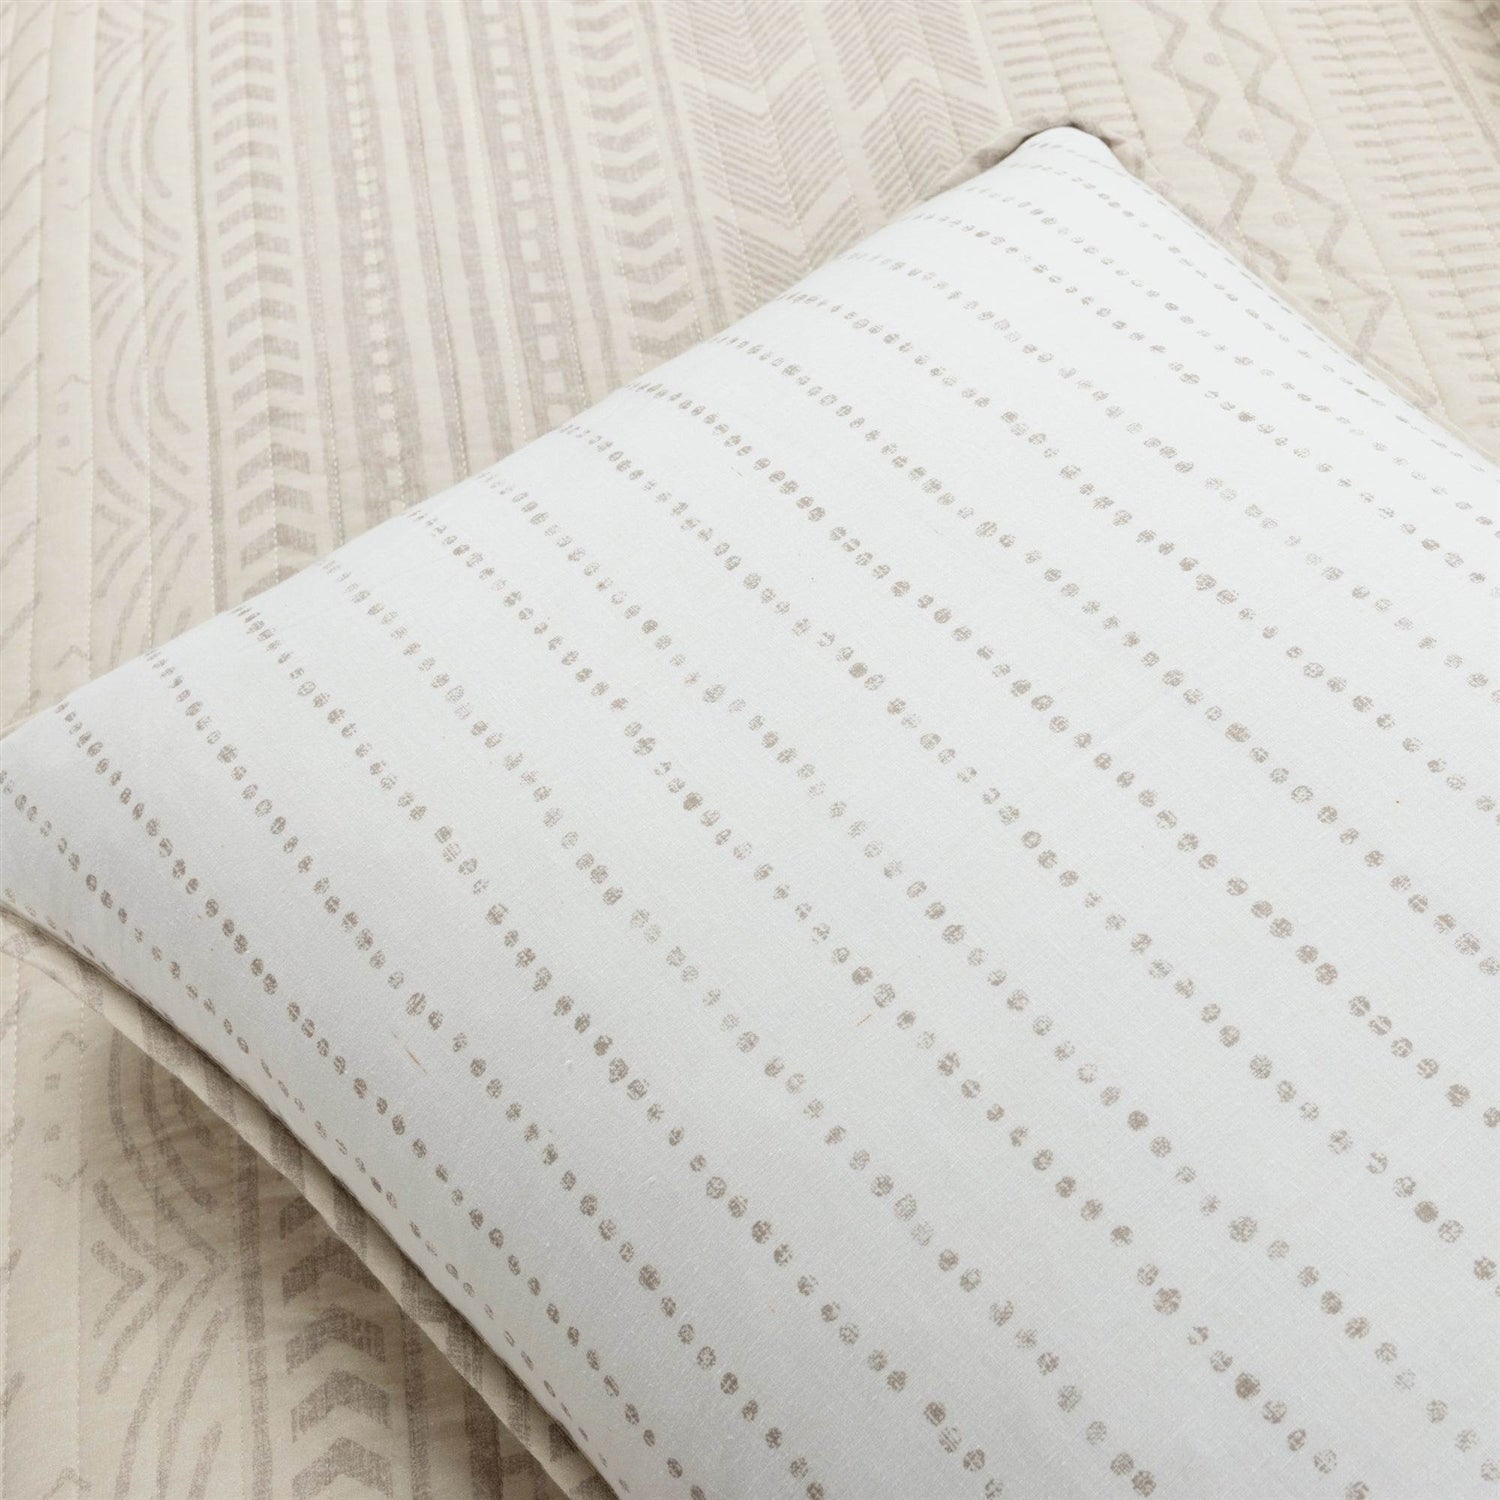 Bedroom > Quilts & Blankets - King Scandinavian Chevron Beige Tan White Reversible Cotton Quilt Set